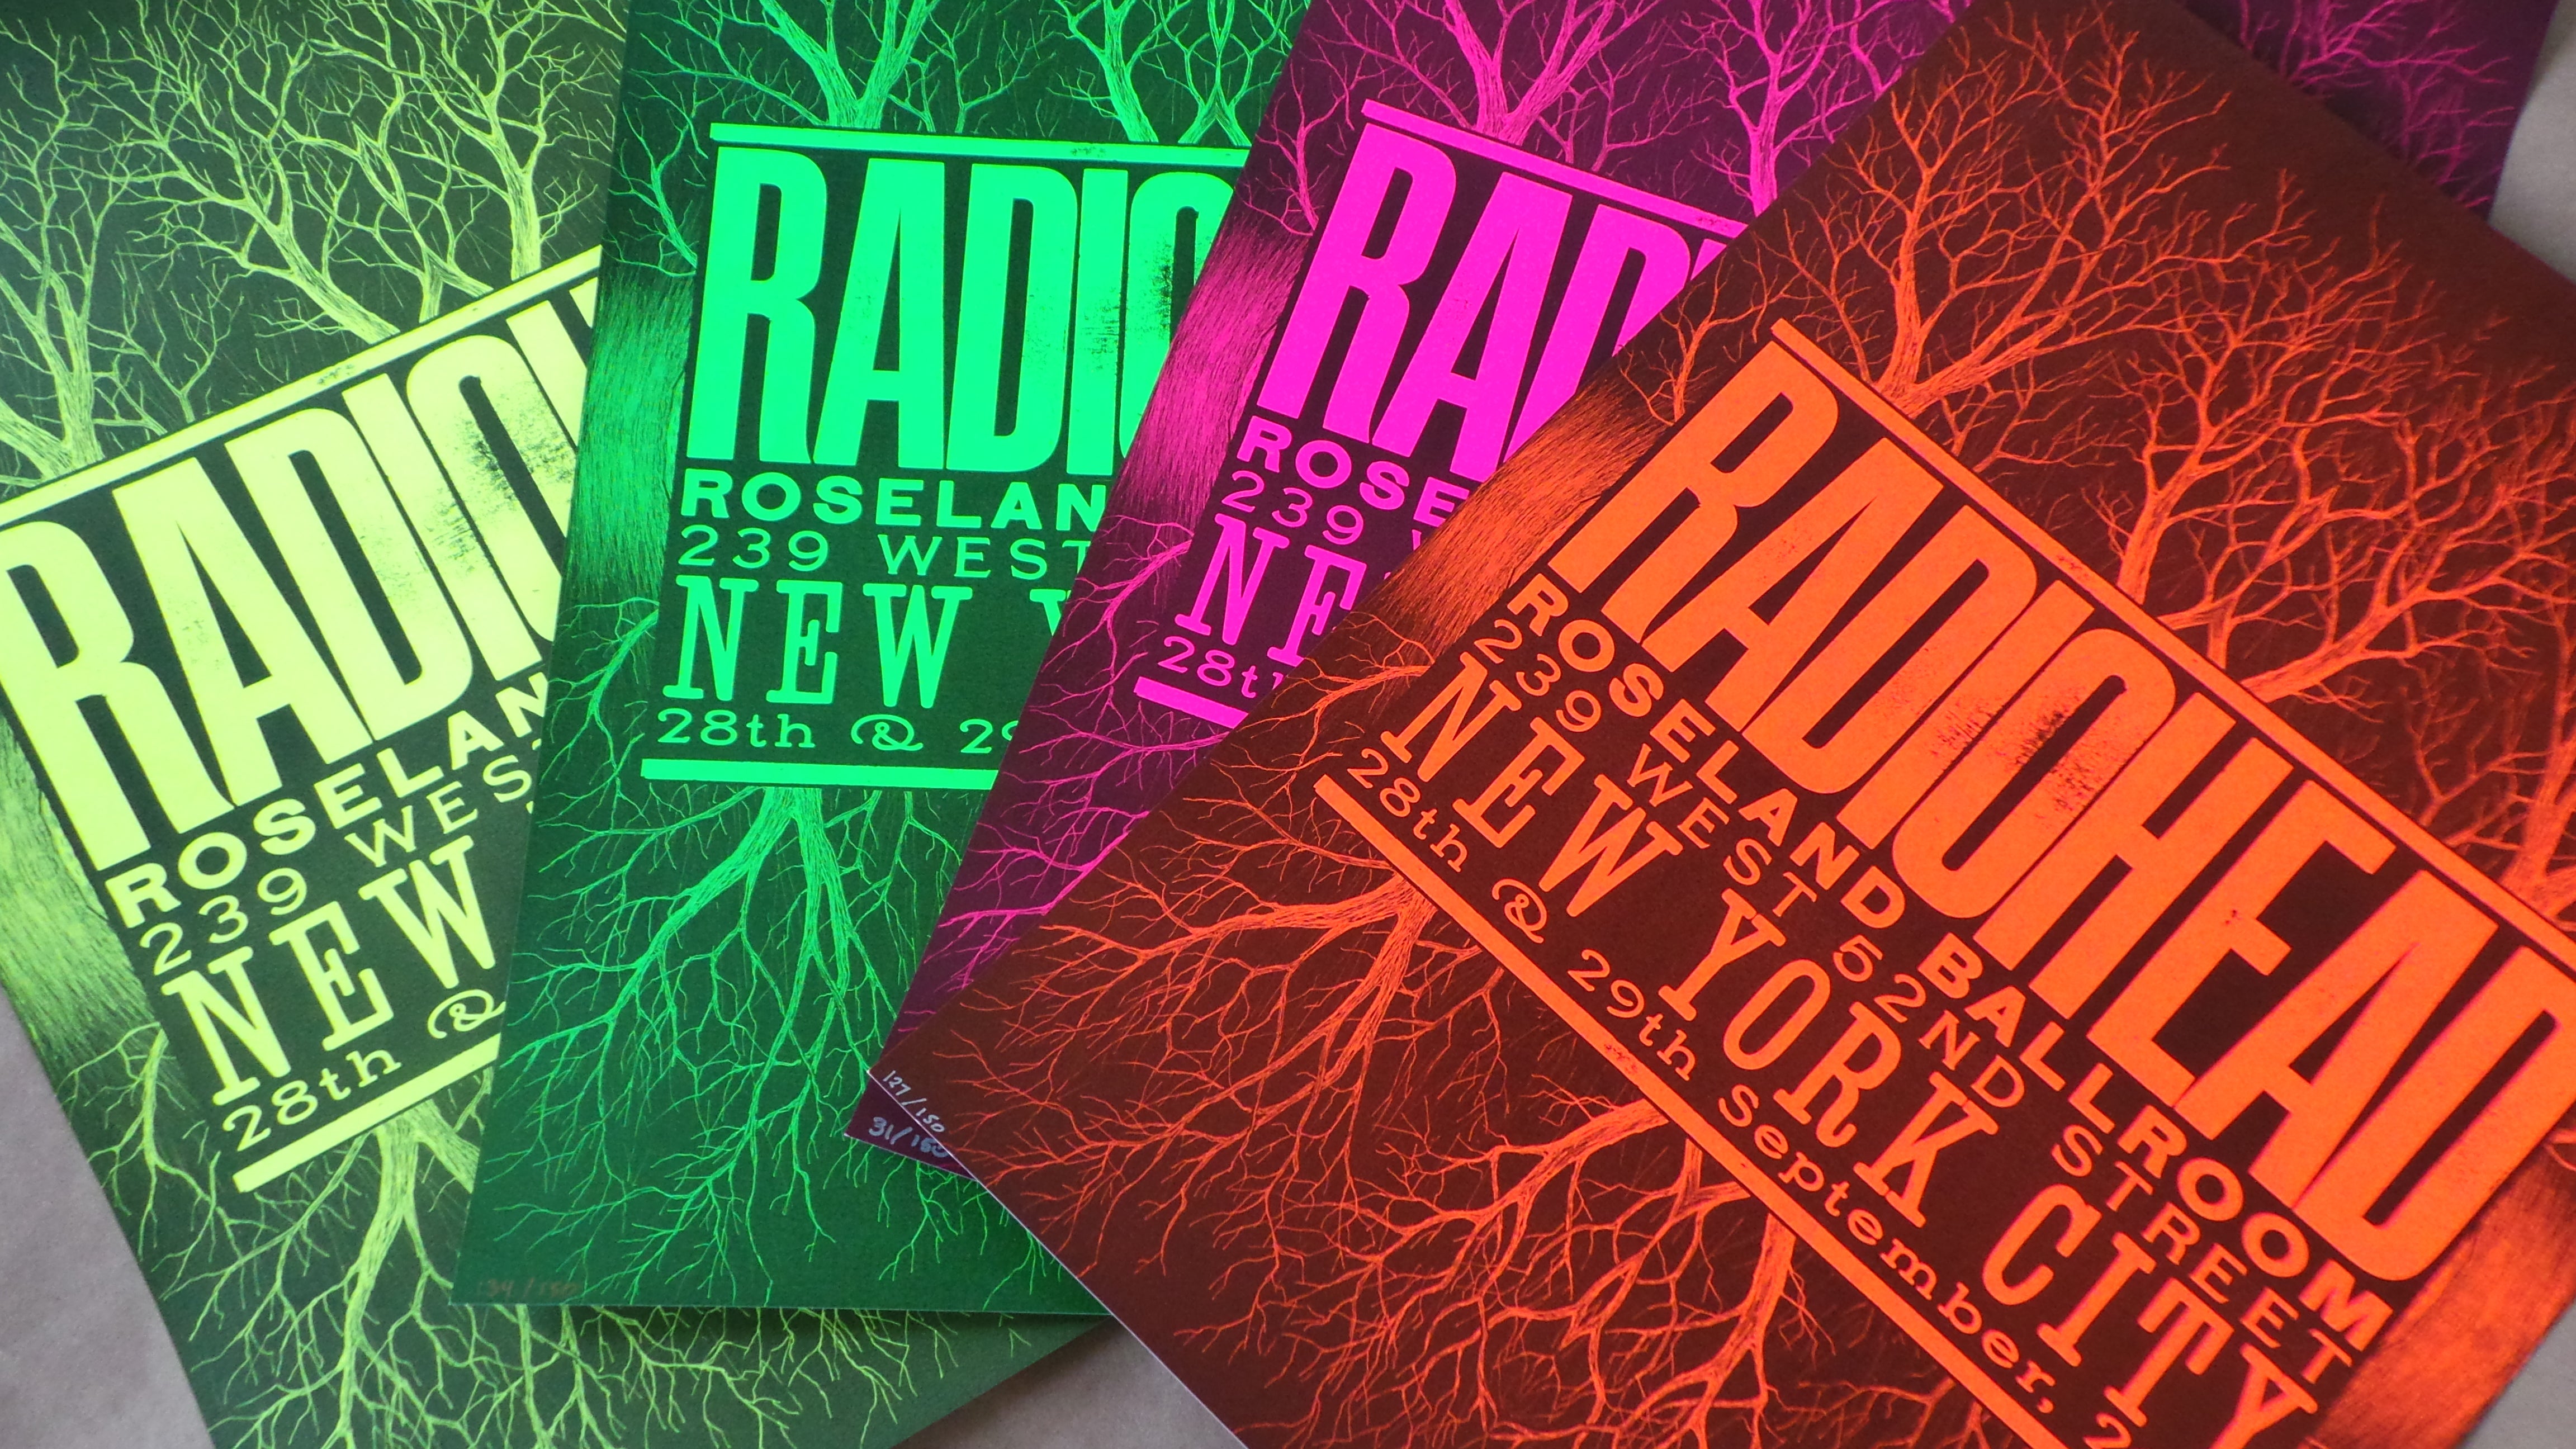 Radiohead Roseland Ballroom NYC 2011 Screenprint Poster Pink Edition xx/150